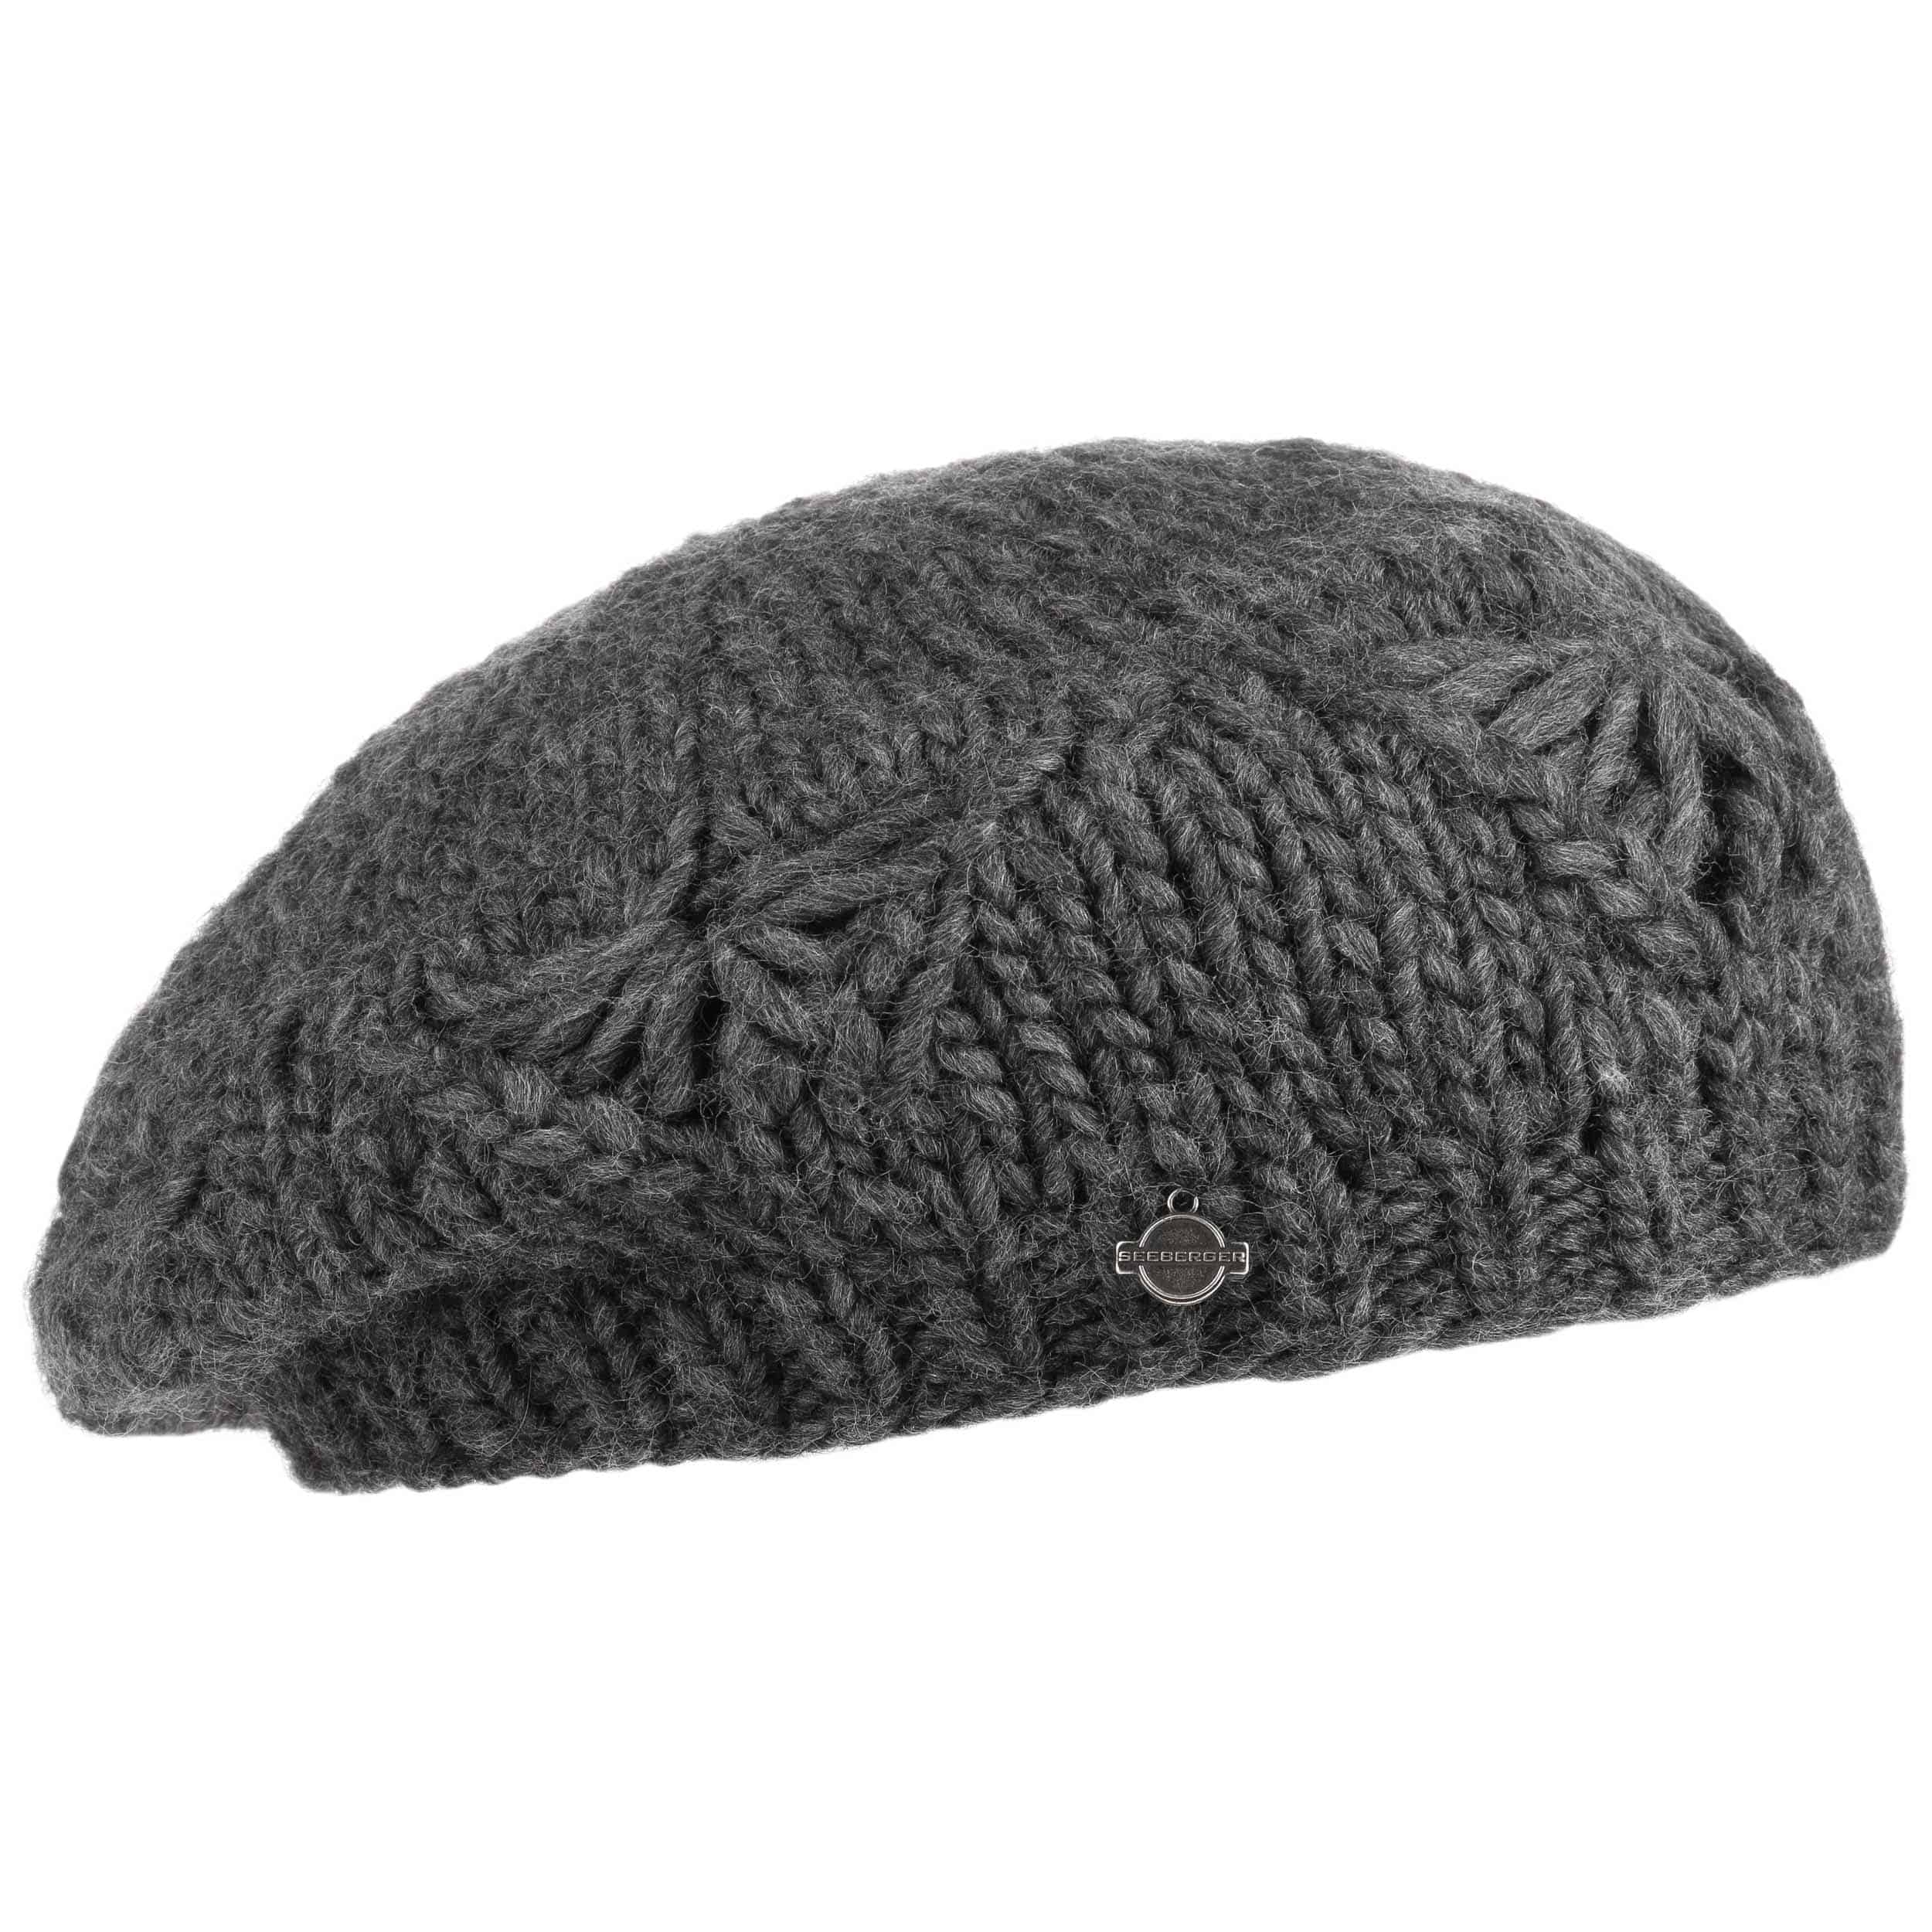 tricoter 1 beret